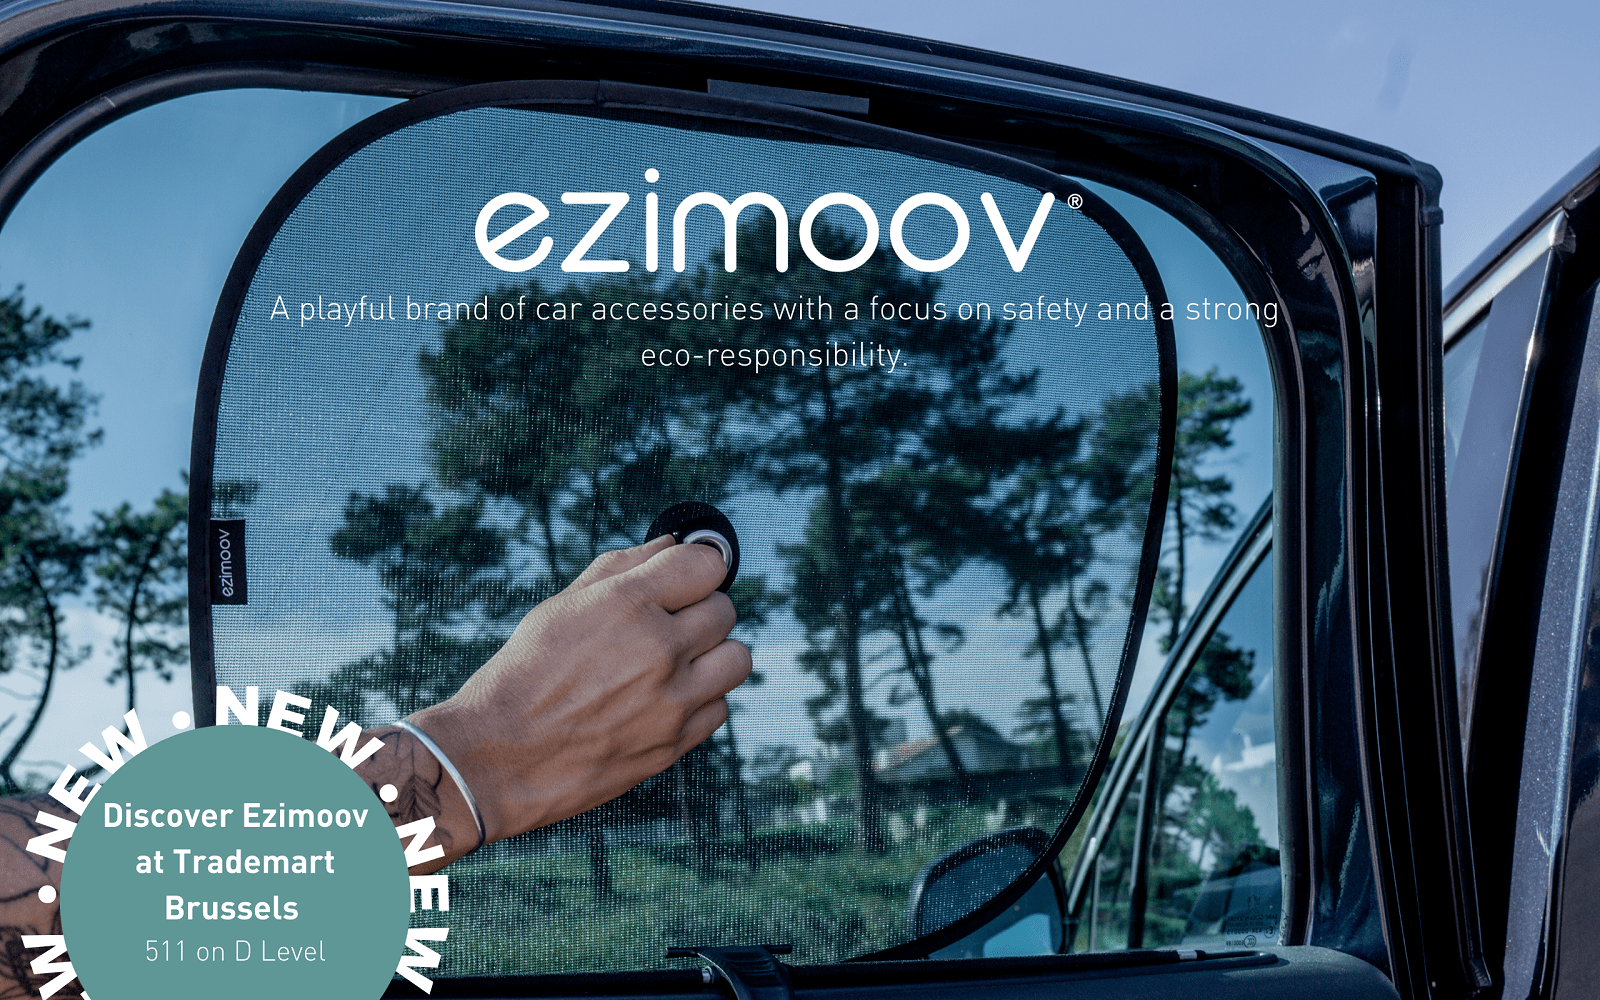 New brand Ezimoov